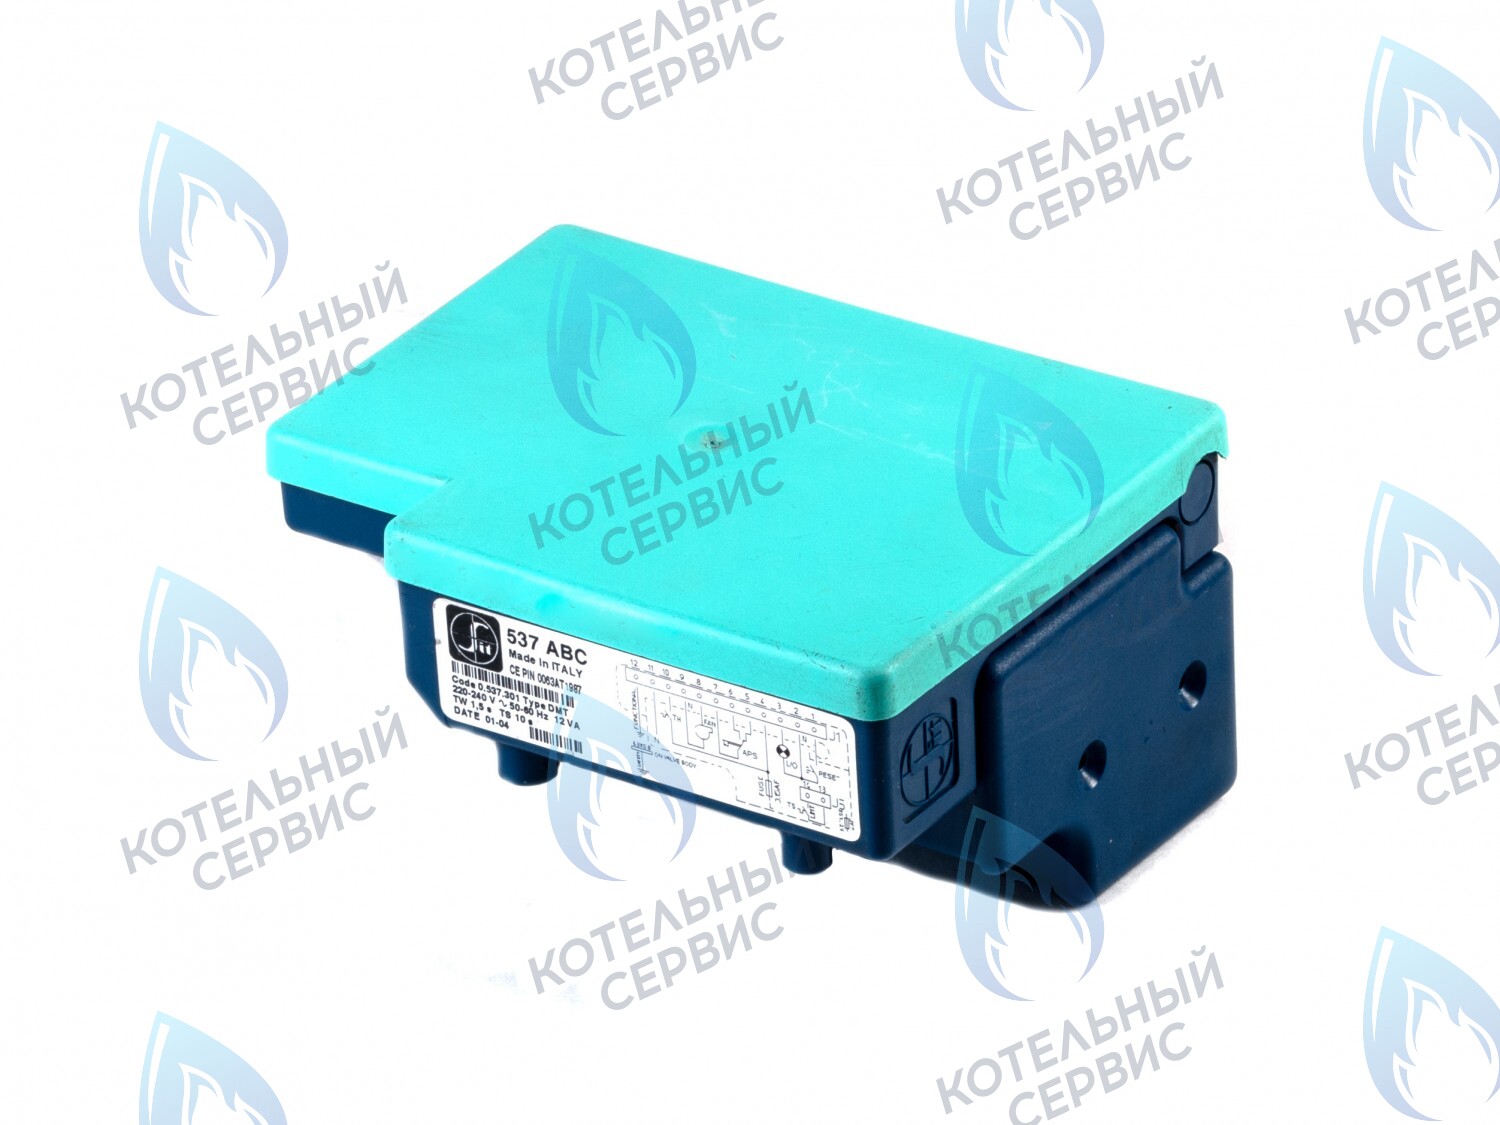 IB003 Электроника розжига (турбо) 537ABC PROTHERM (Блок розжига SIT-537ABC) (0020023214) в Казани